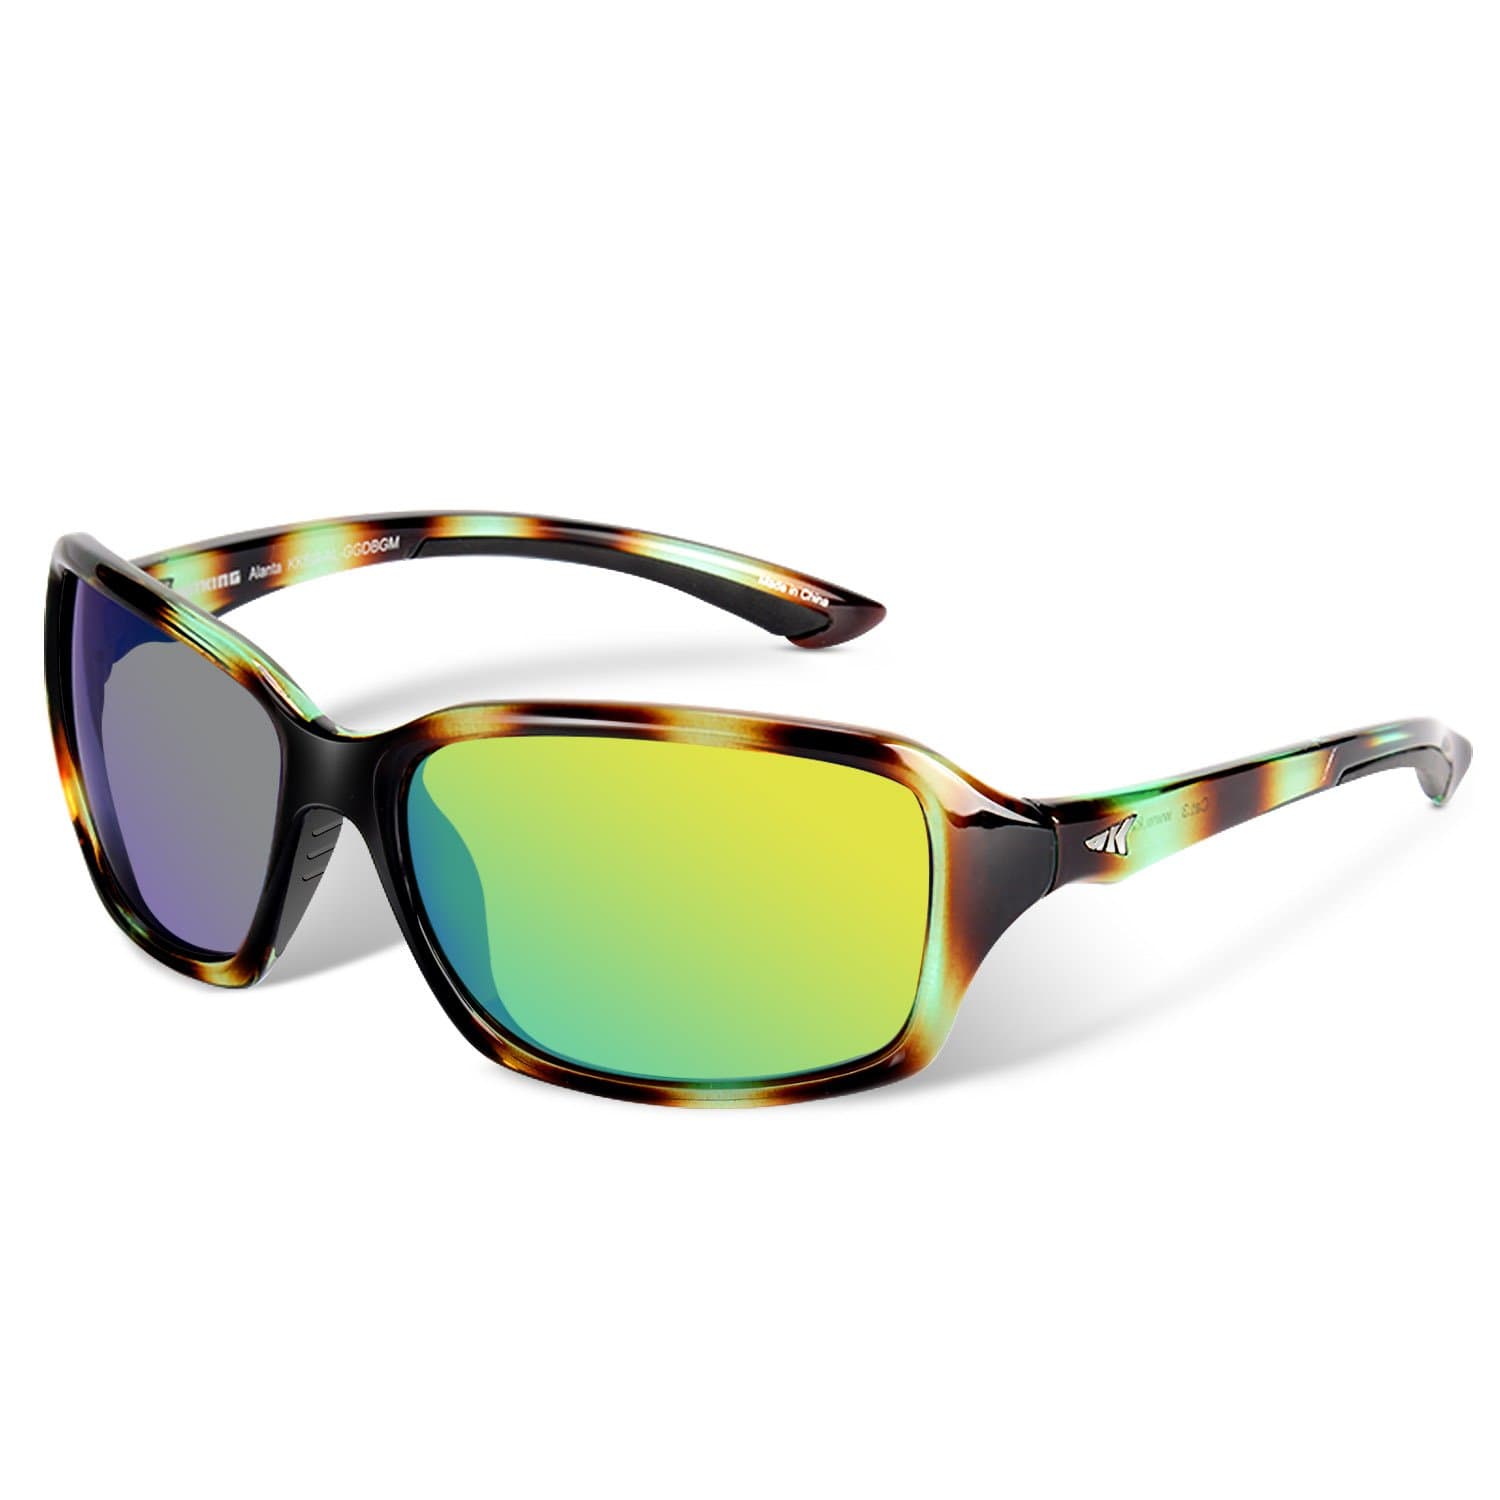 Matrix Upton Prescription Sports Sunglasses Black For Men and Women -  Cycling, Jogging and Baseball Glasses